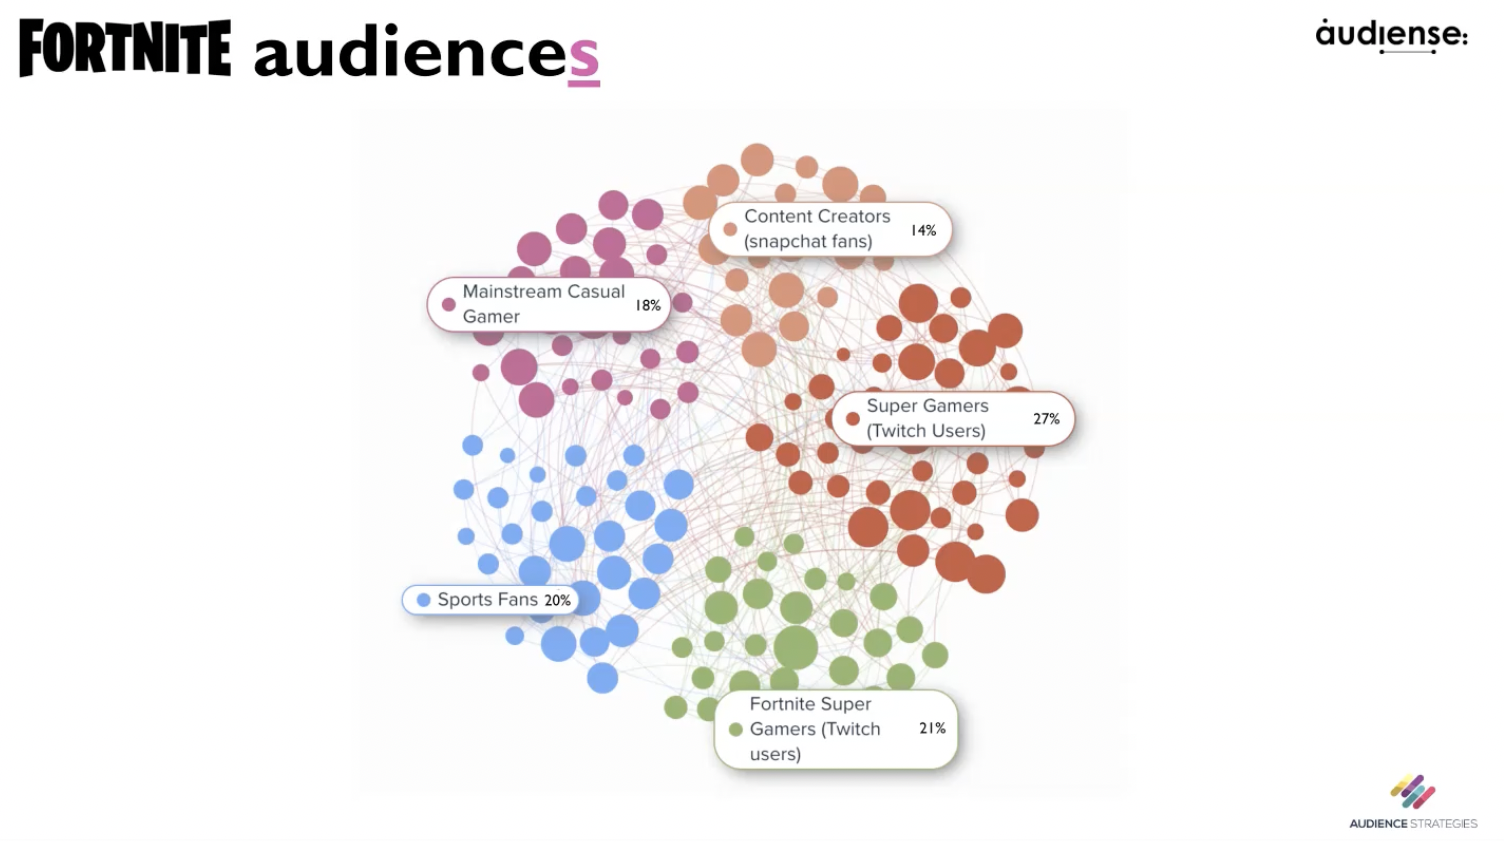 Audiense blog - Audience segments with David Boyle